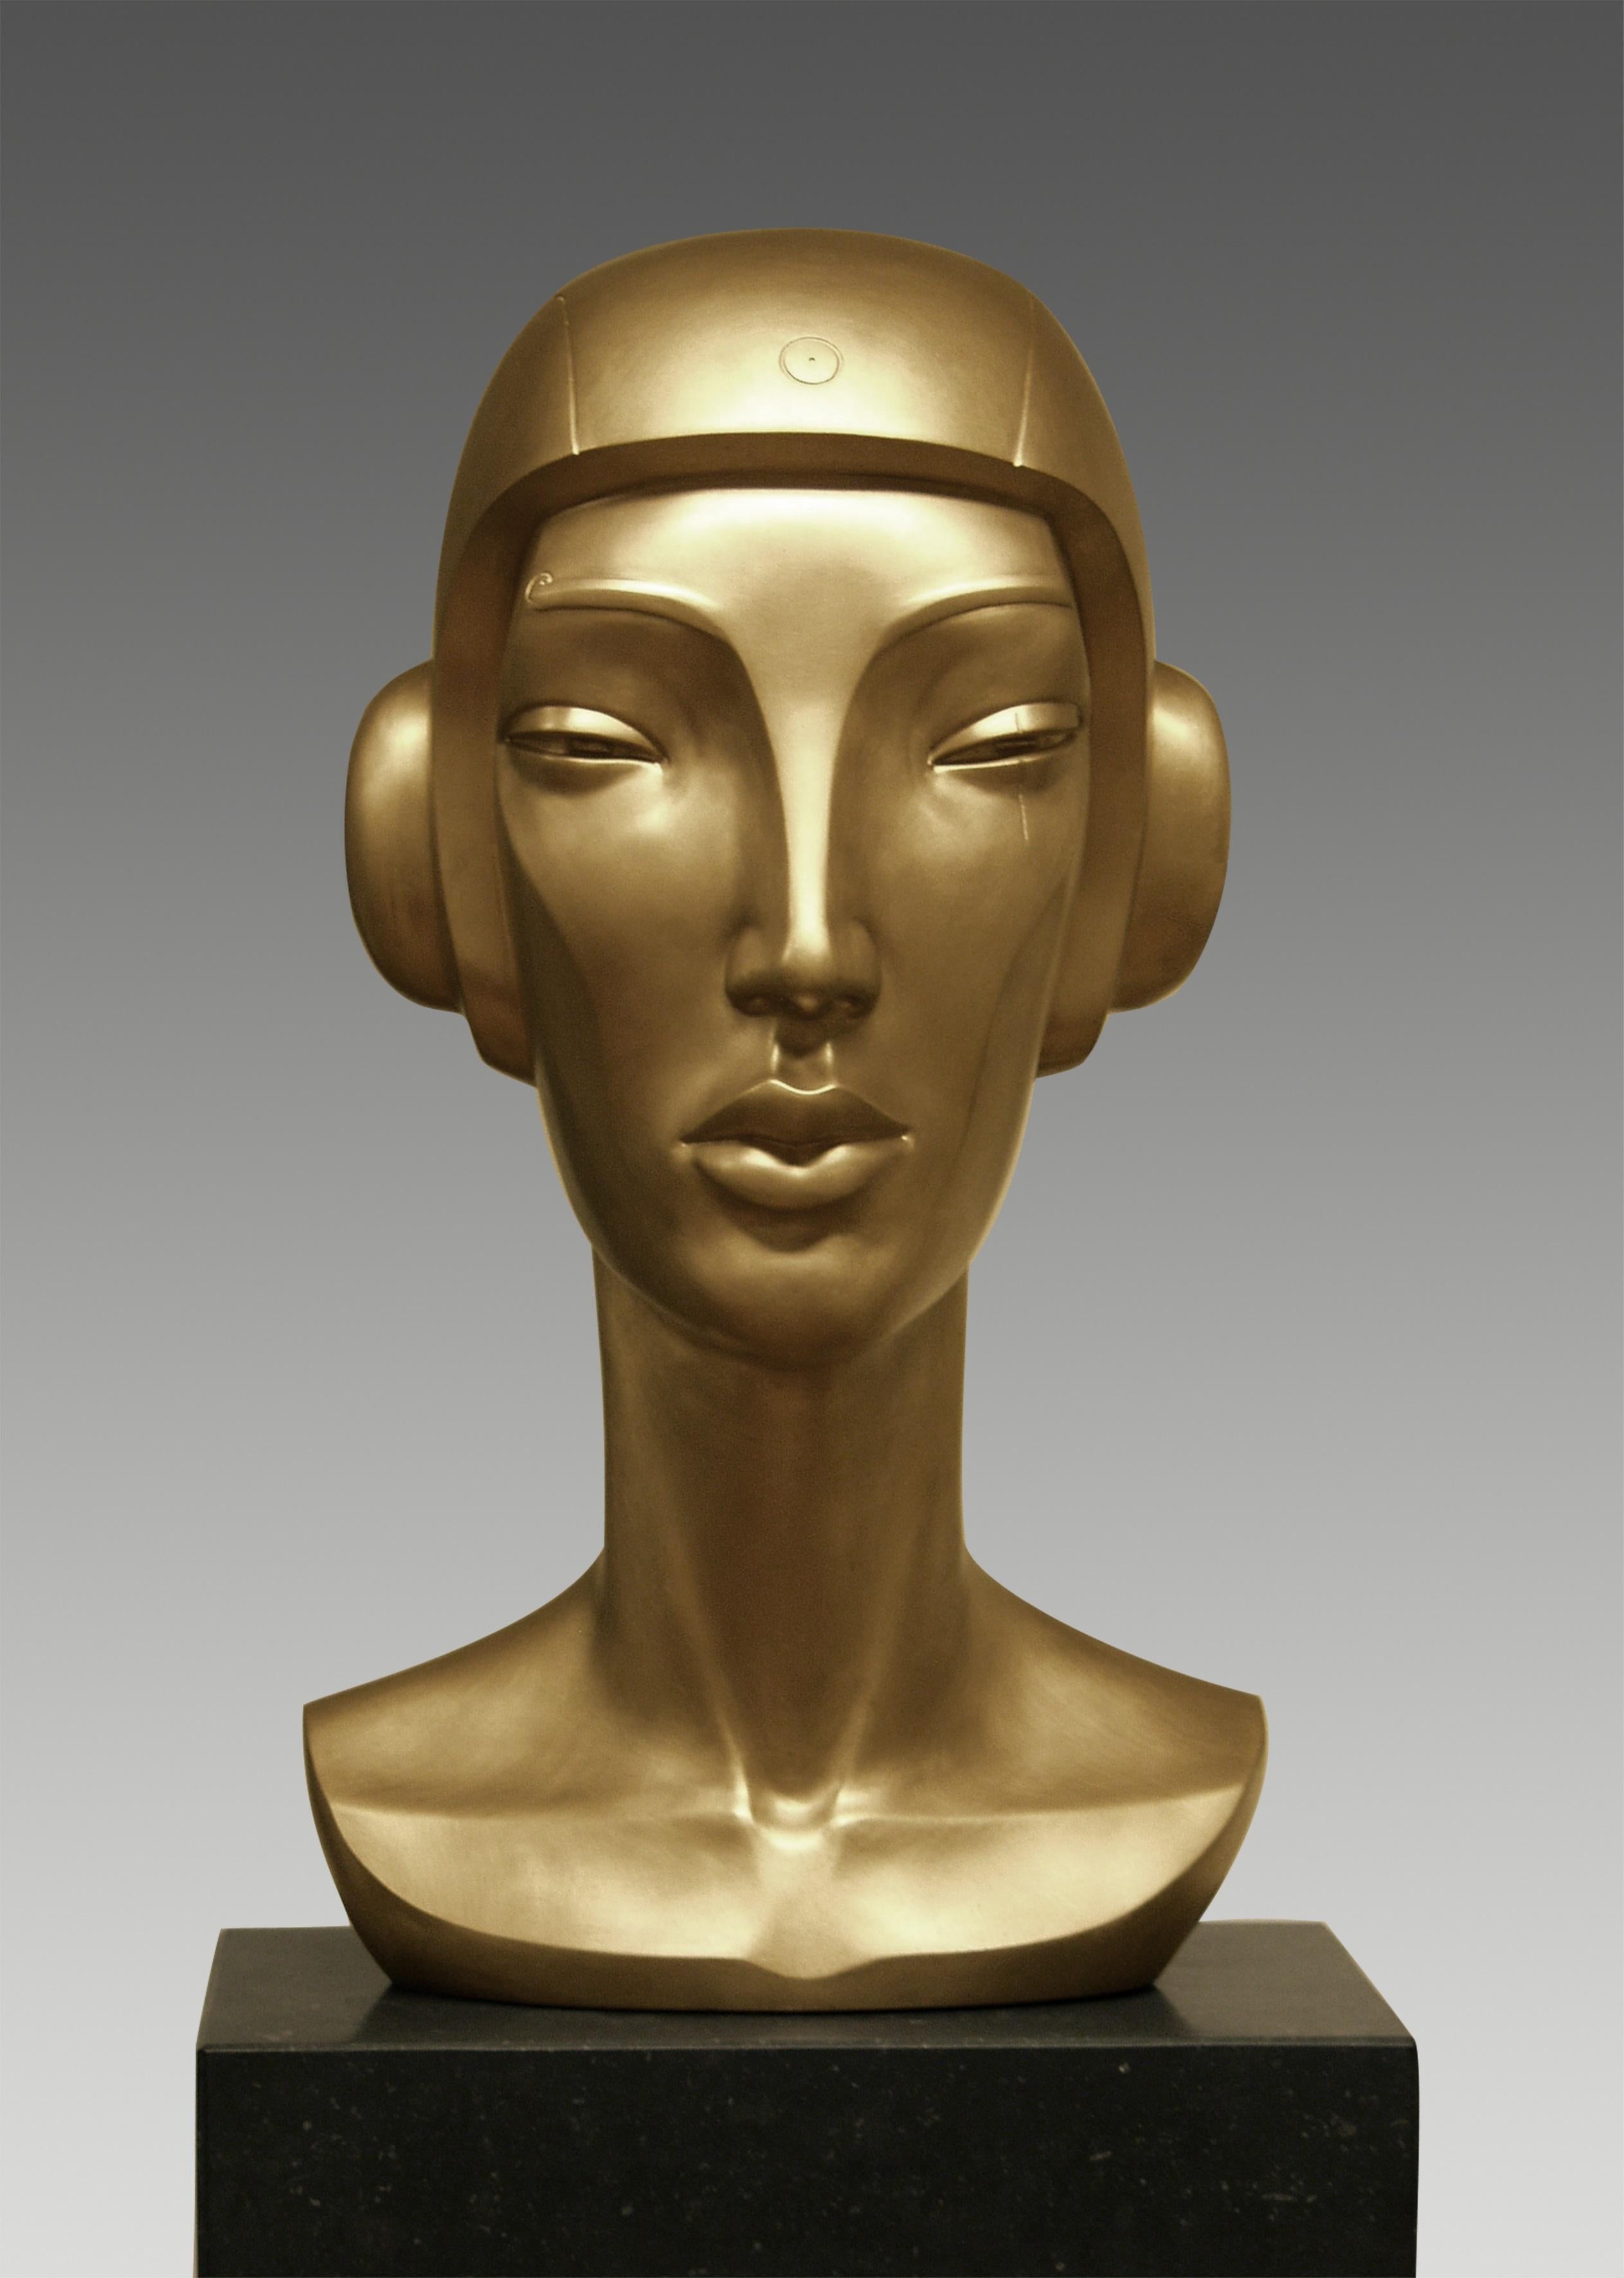 Erwin Meijer Figurative Sculpture - Hybride Hybrid Bronze Sculpture Golden Head Contemporary